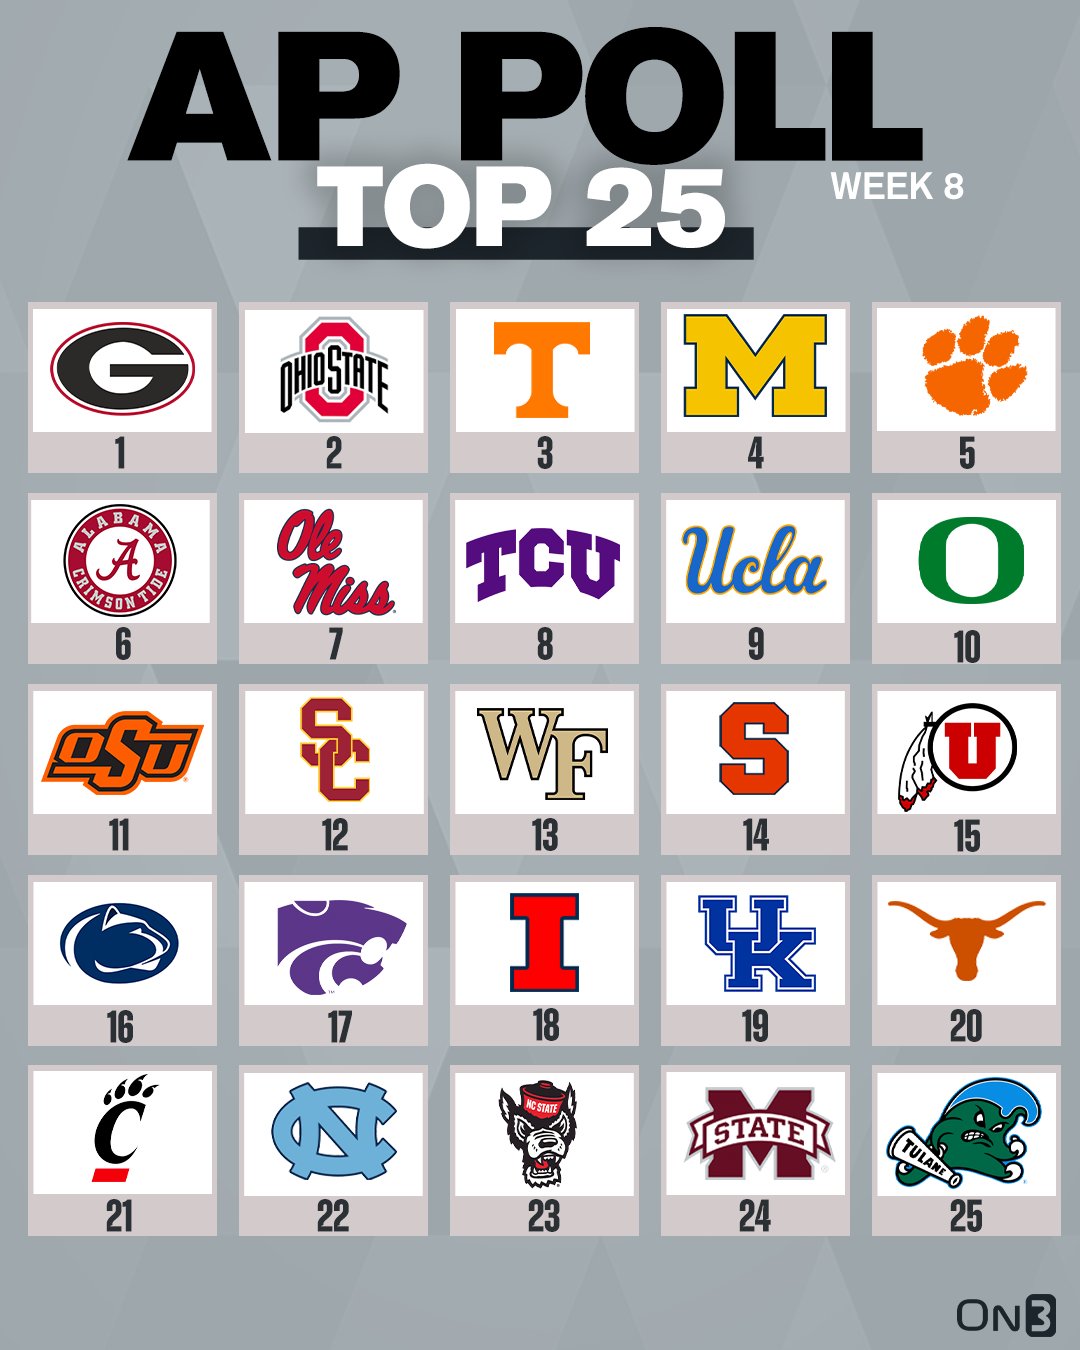 On3 on X: 'College Football Week 8 AP Poll